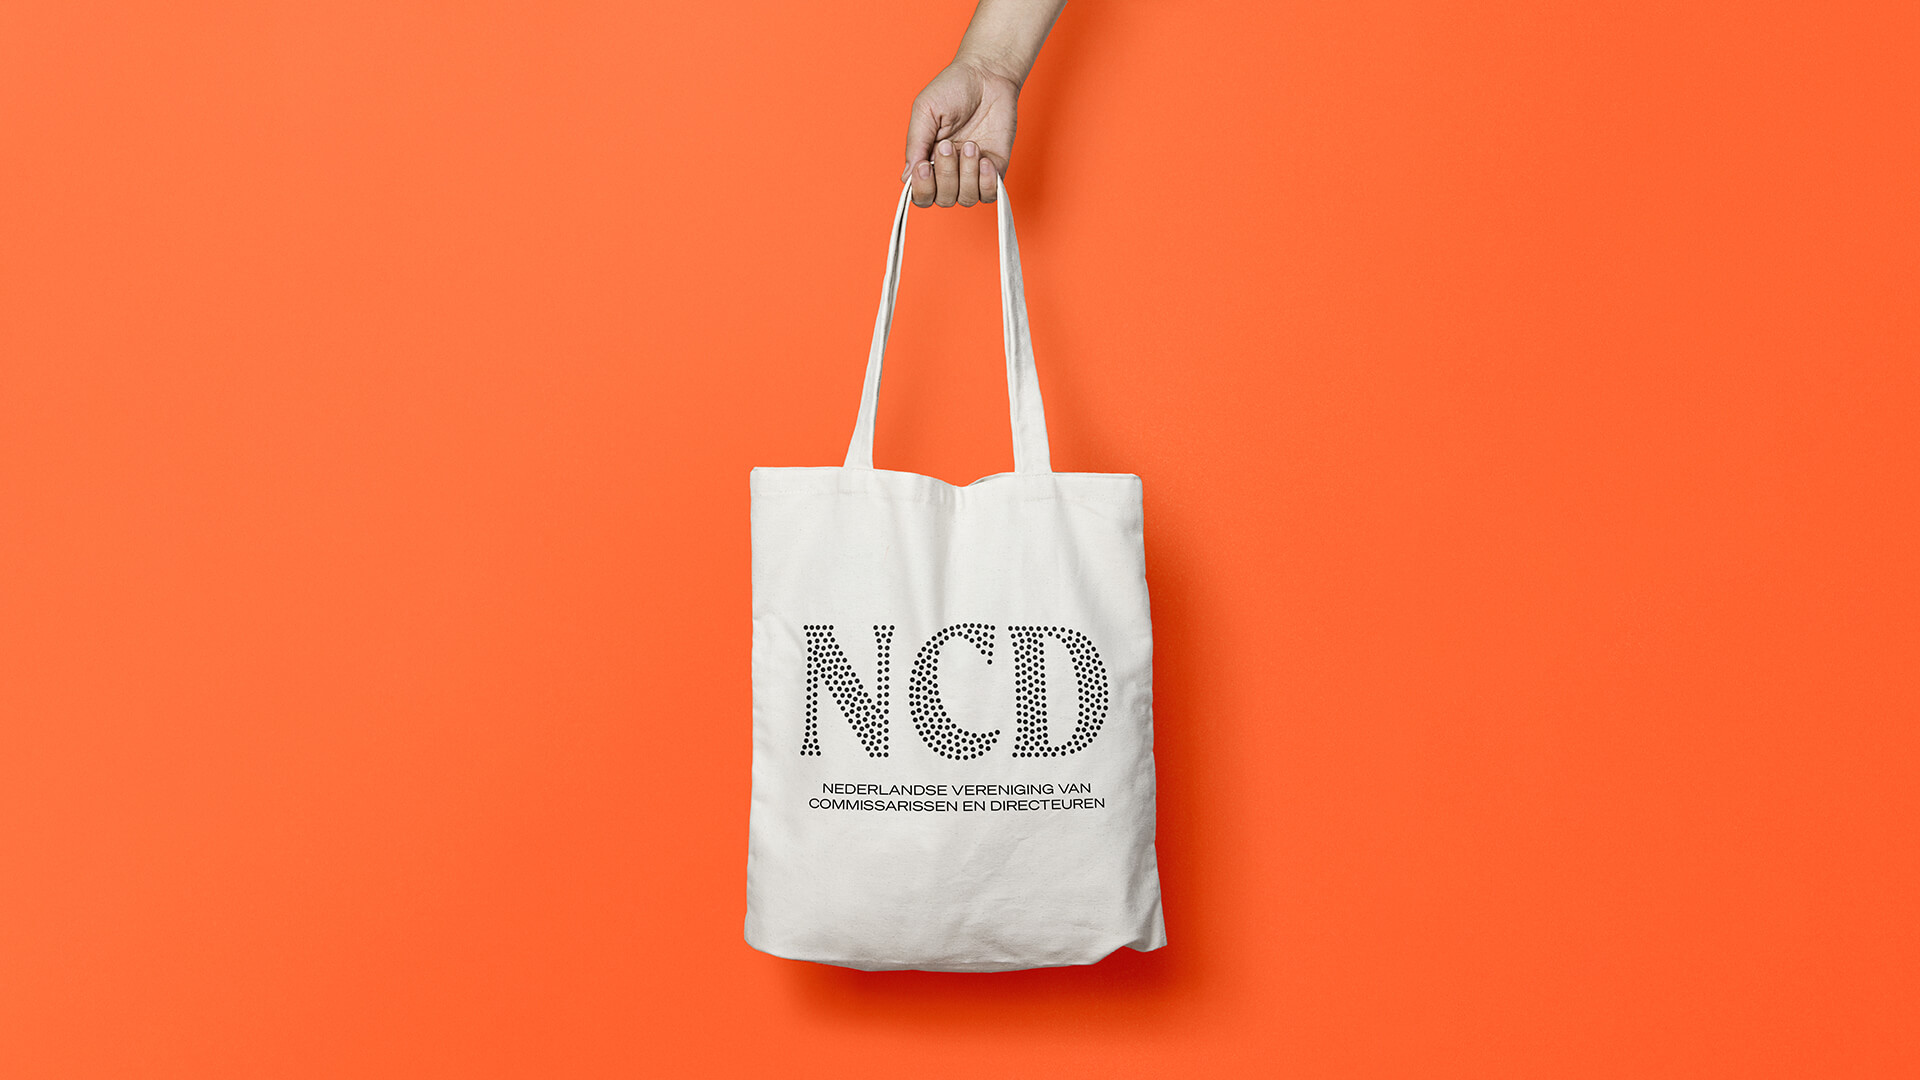 NCD — Visual Identity